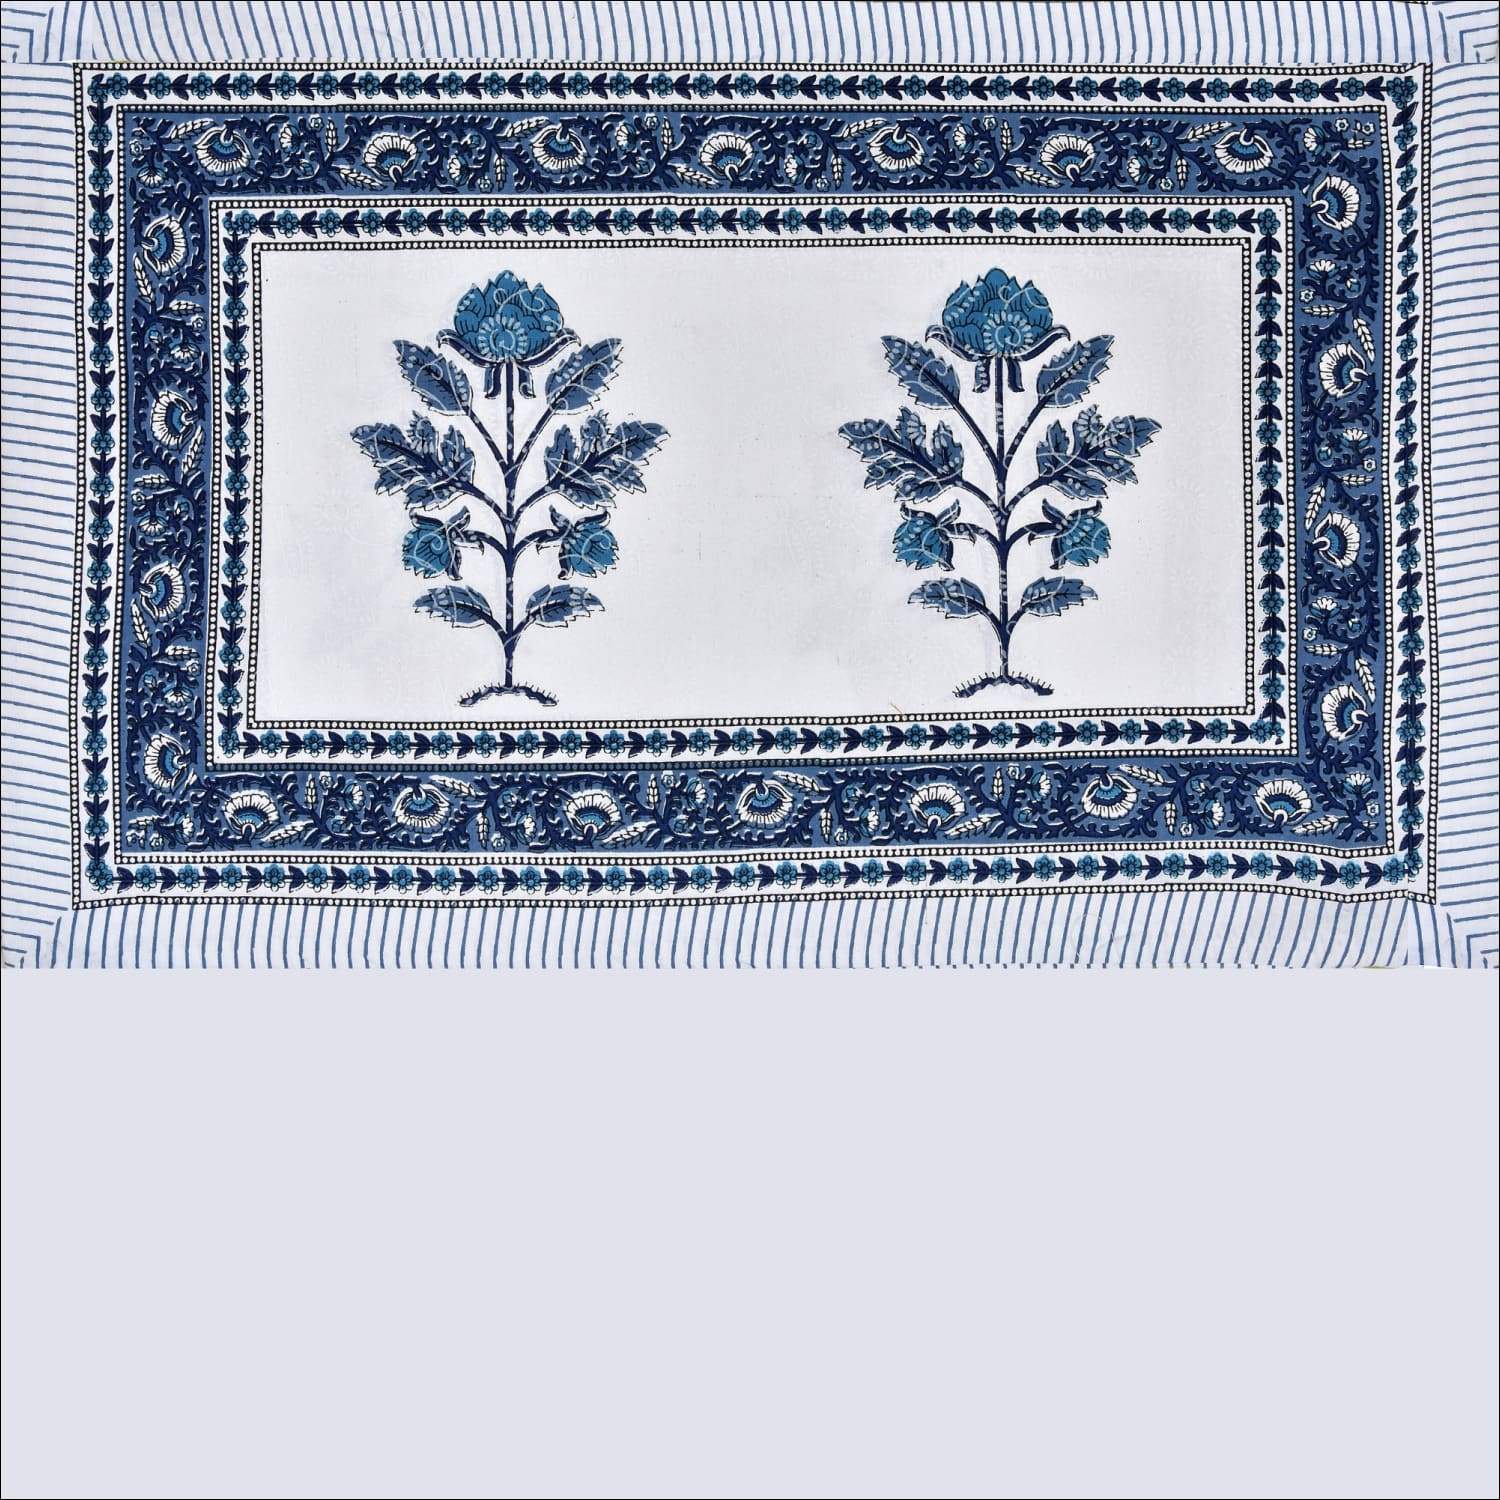 Blue Tree Design Cotton Jaipuri Bedsheet (Double Bed)